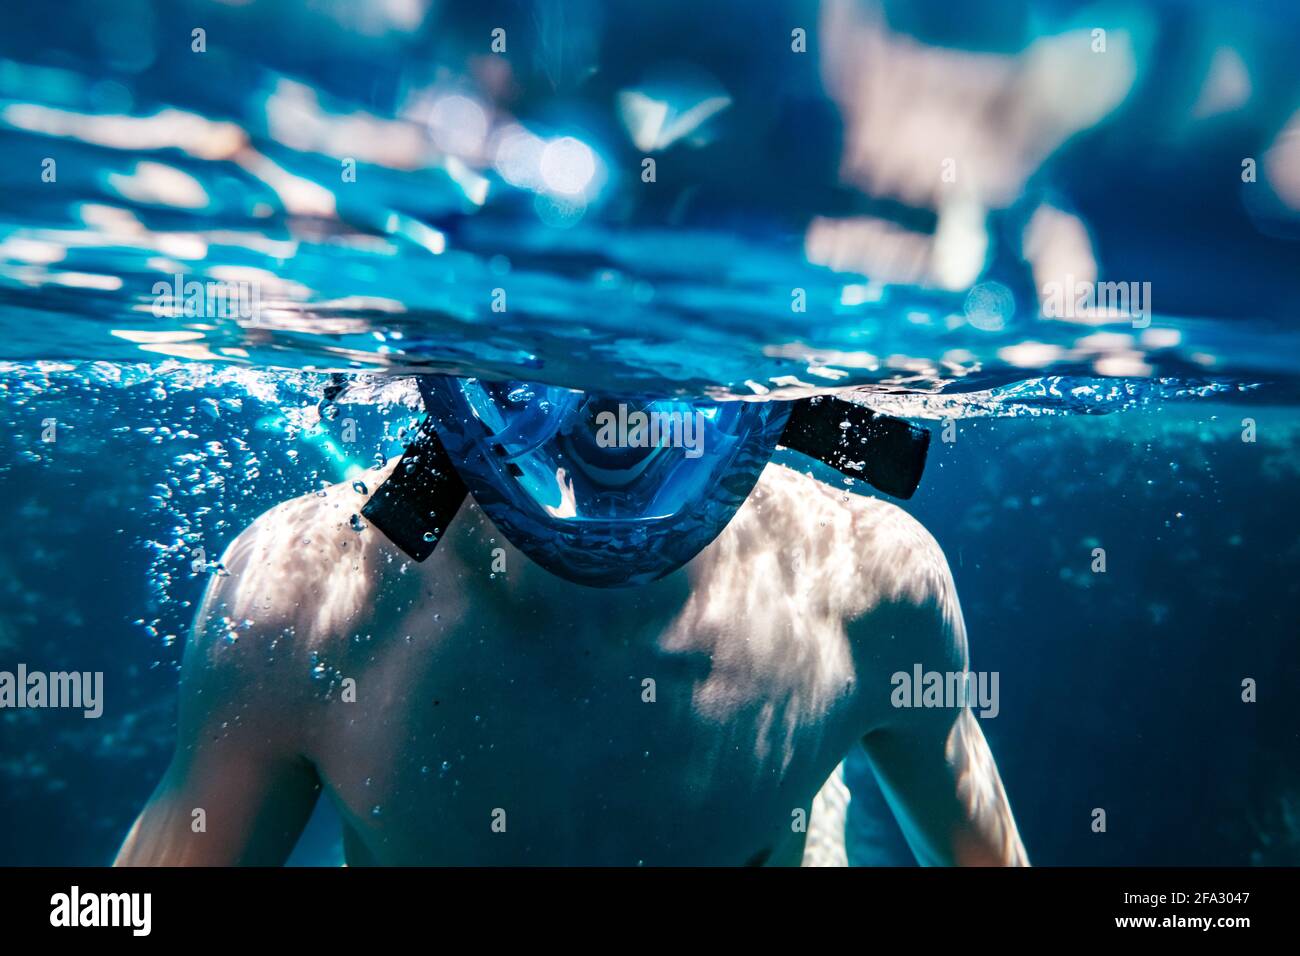 Man in snorkeling mask underwater swimming Stock Photo